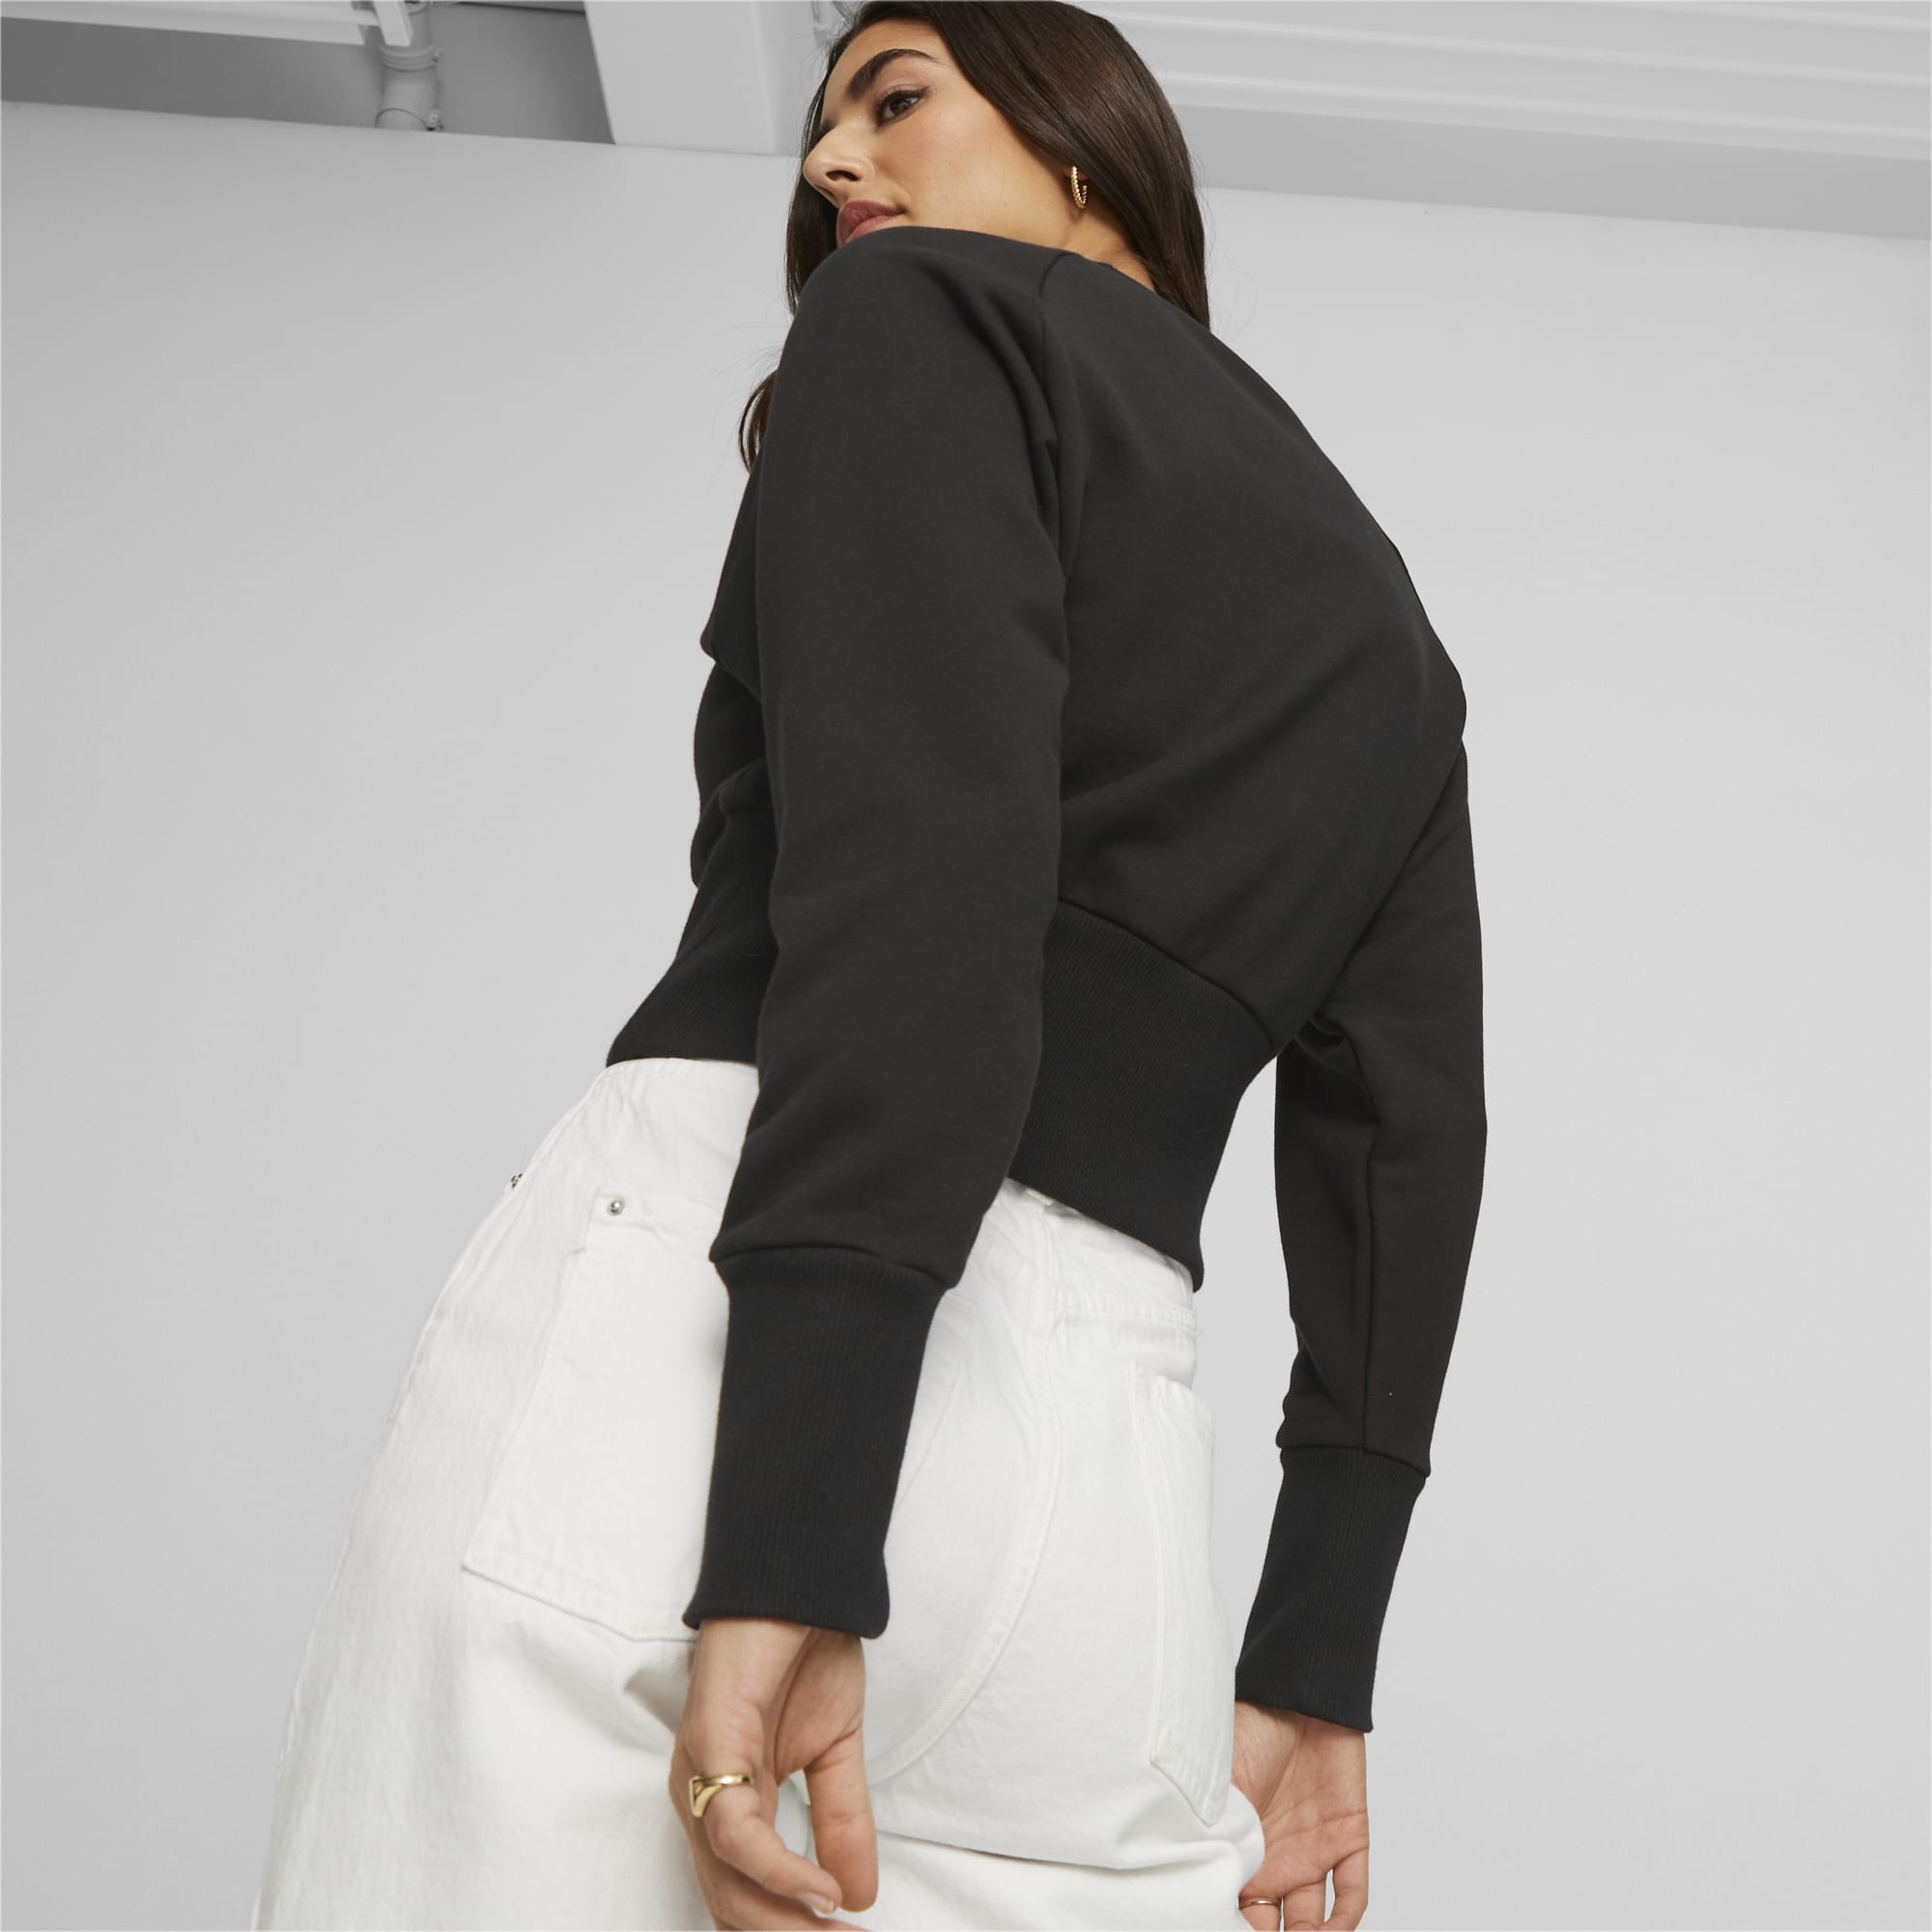 PUMA Classics Women's Sweatshirt, Black, Size XS, Clothing